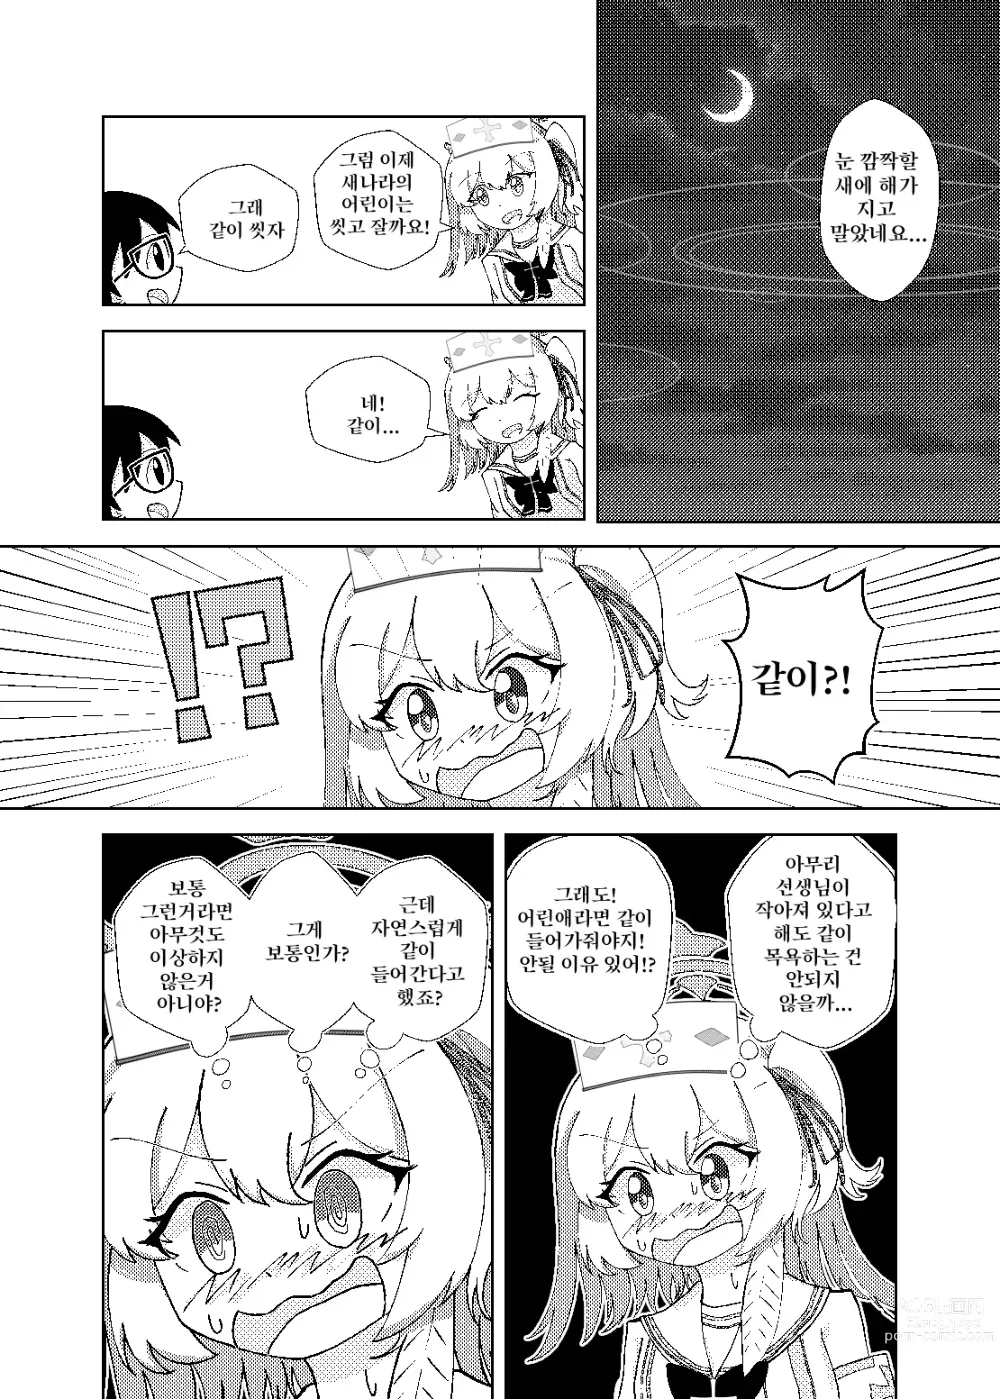 Page 10 of doujinshi 세리나가 유아화 선생님을 간호하는 이야기